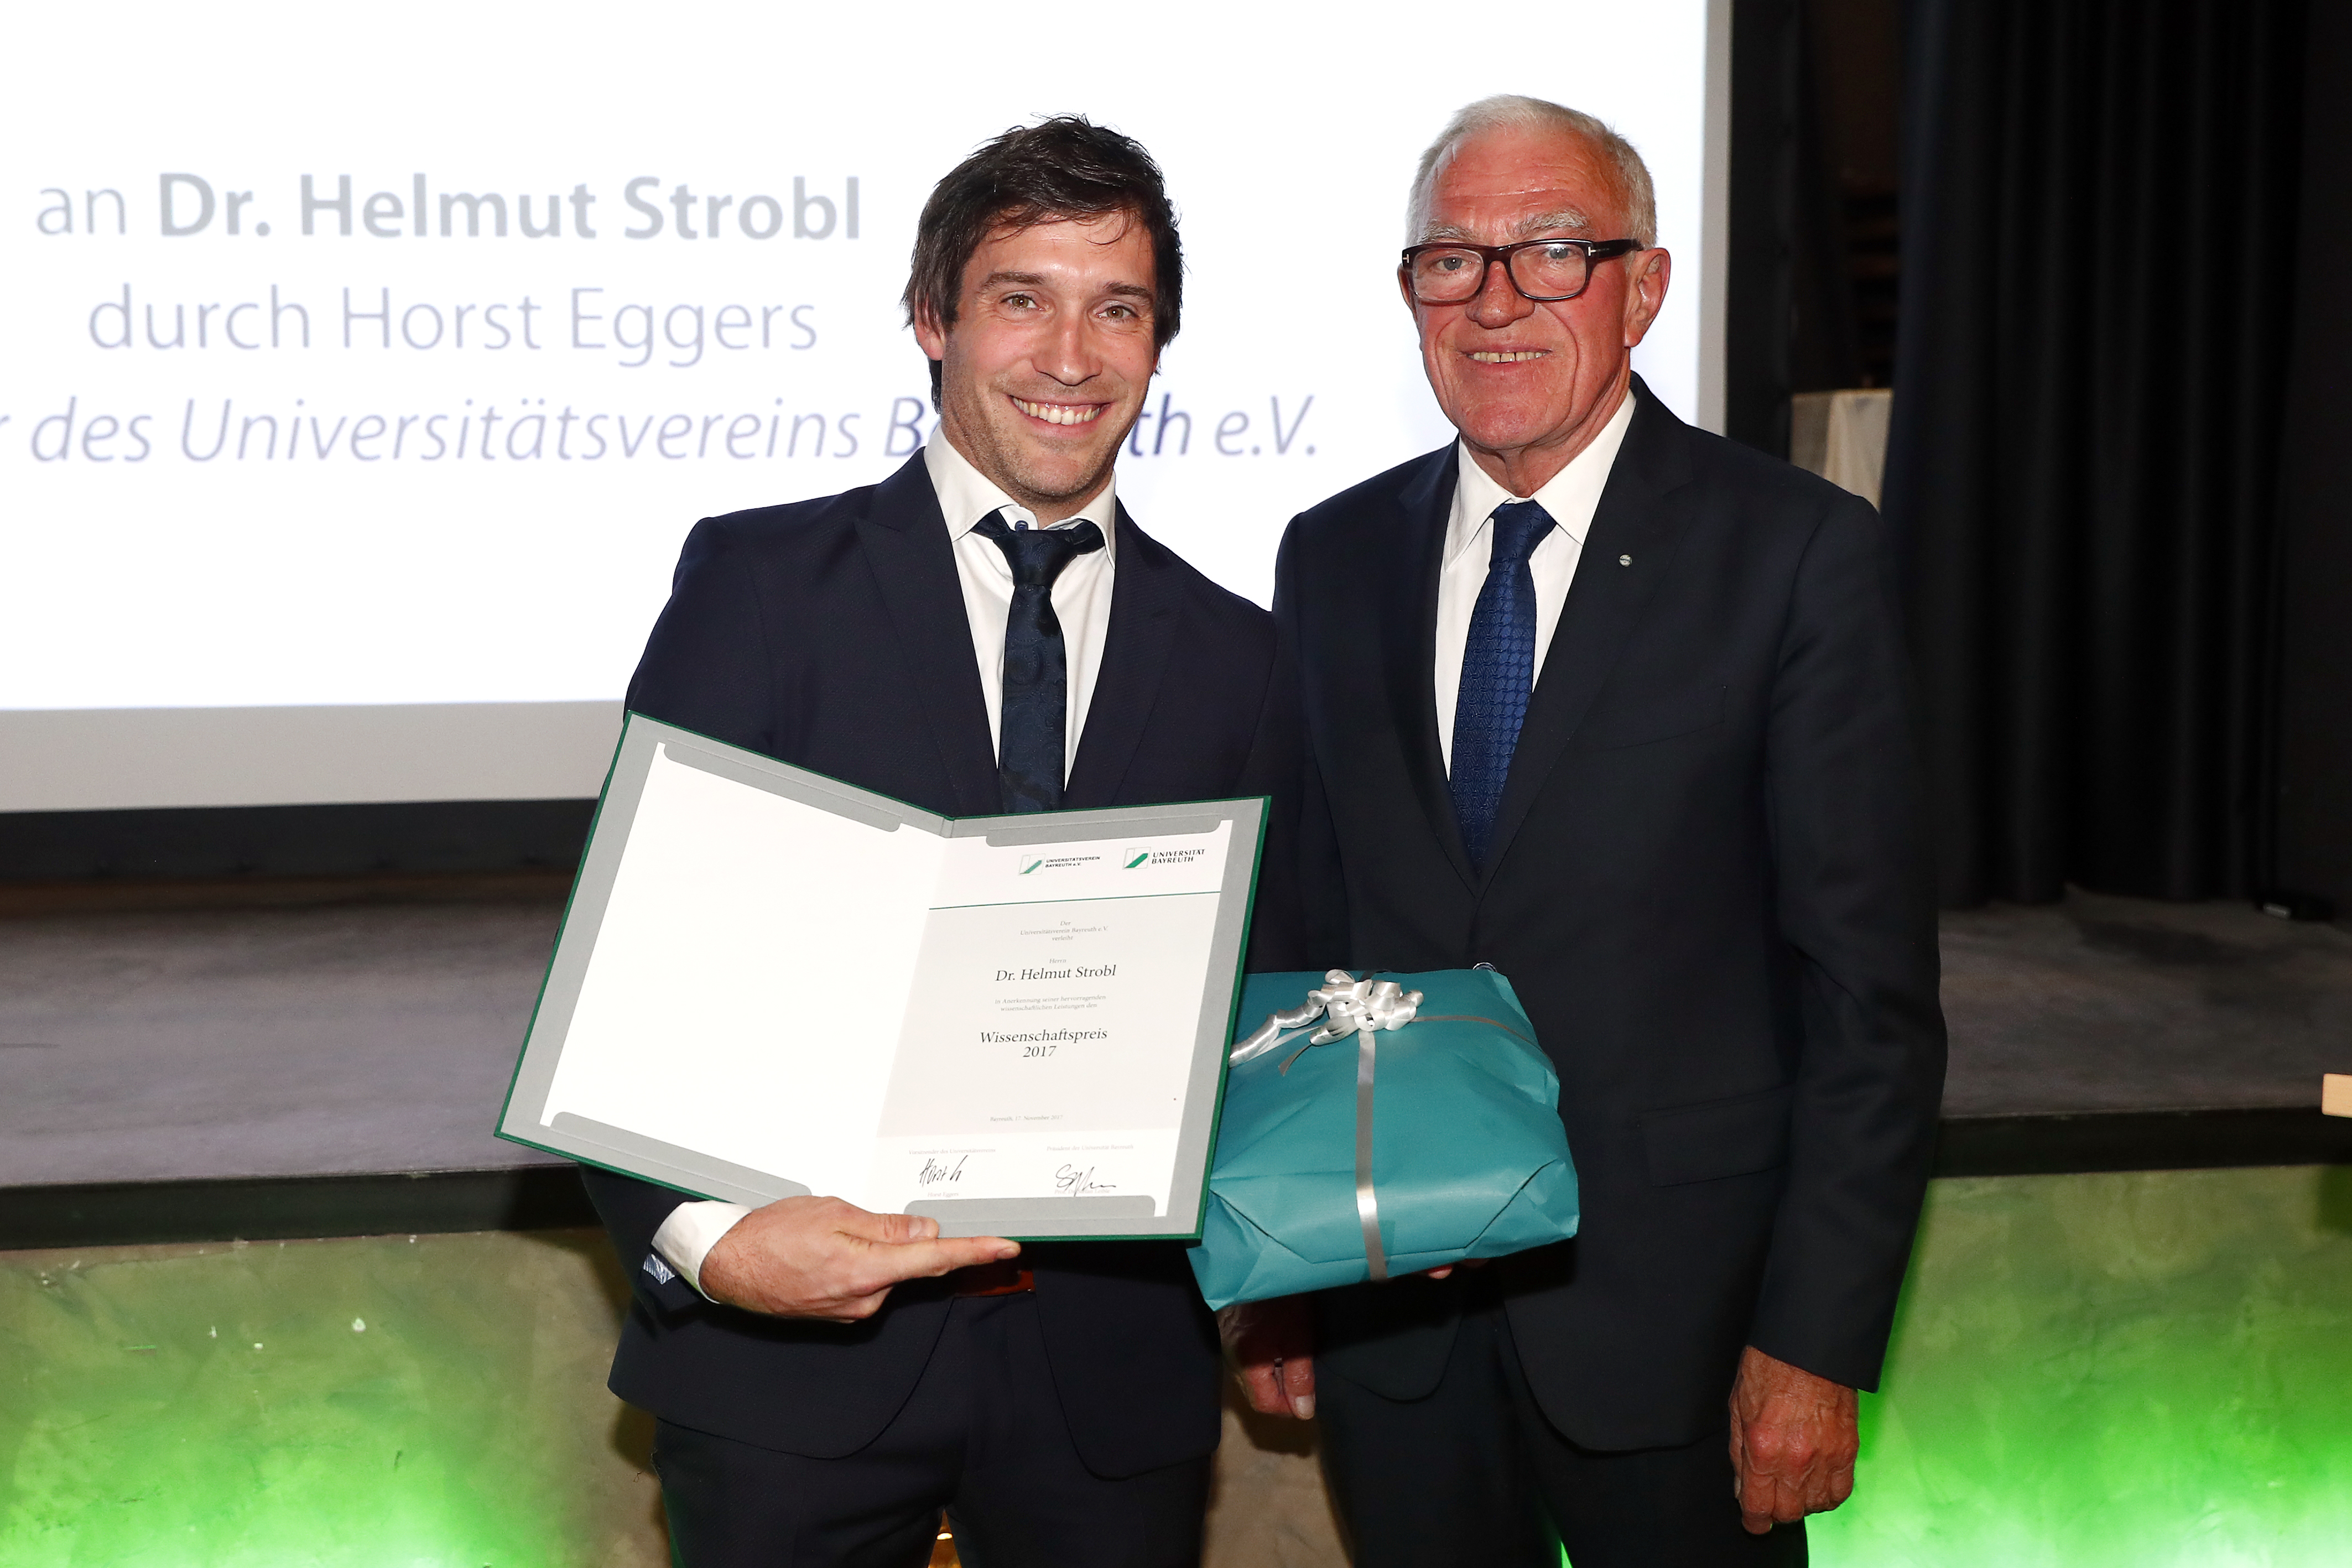 Verleihung des Wissenschaftspreises des Universitätsvereins Bayreuth e.V. an Dr. Helmut Strobl durch Horst Eggers